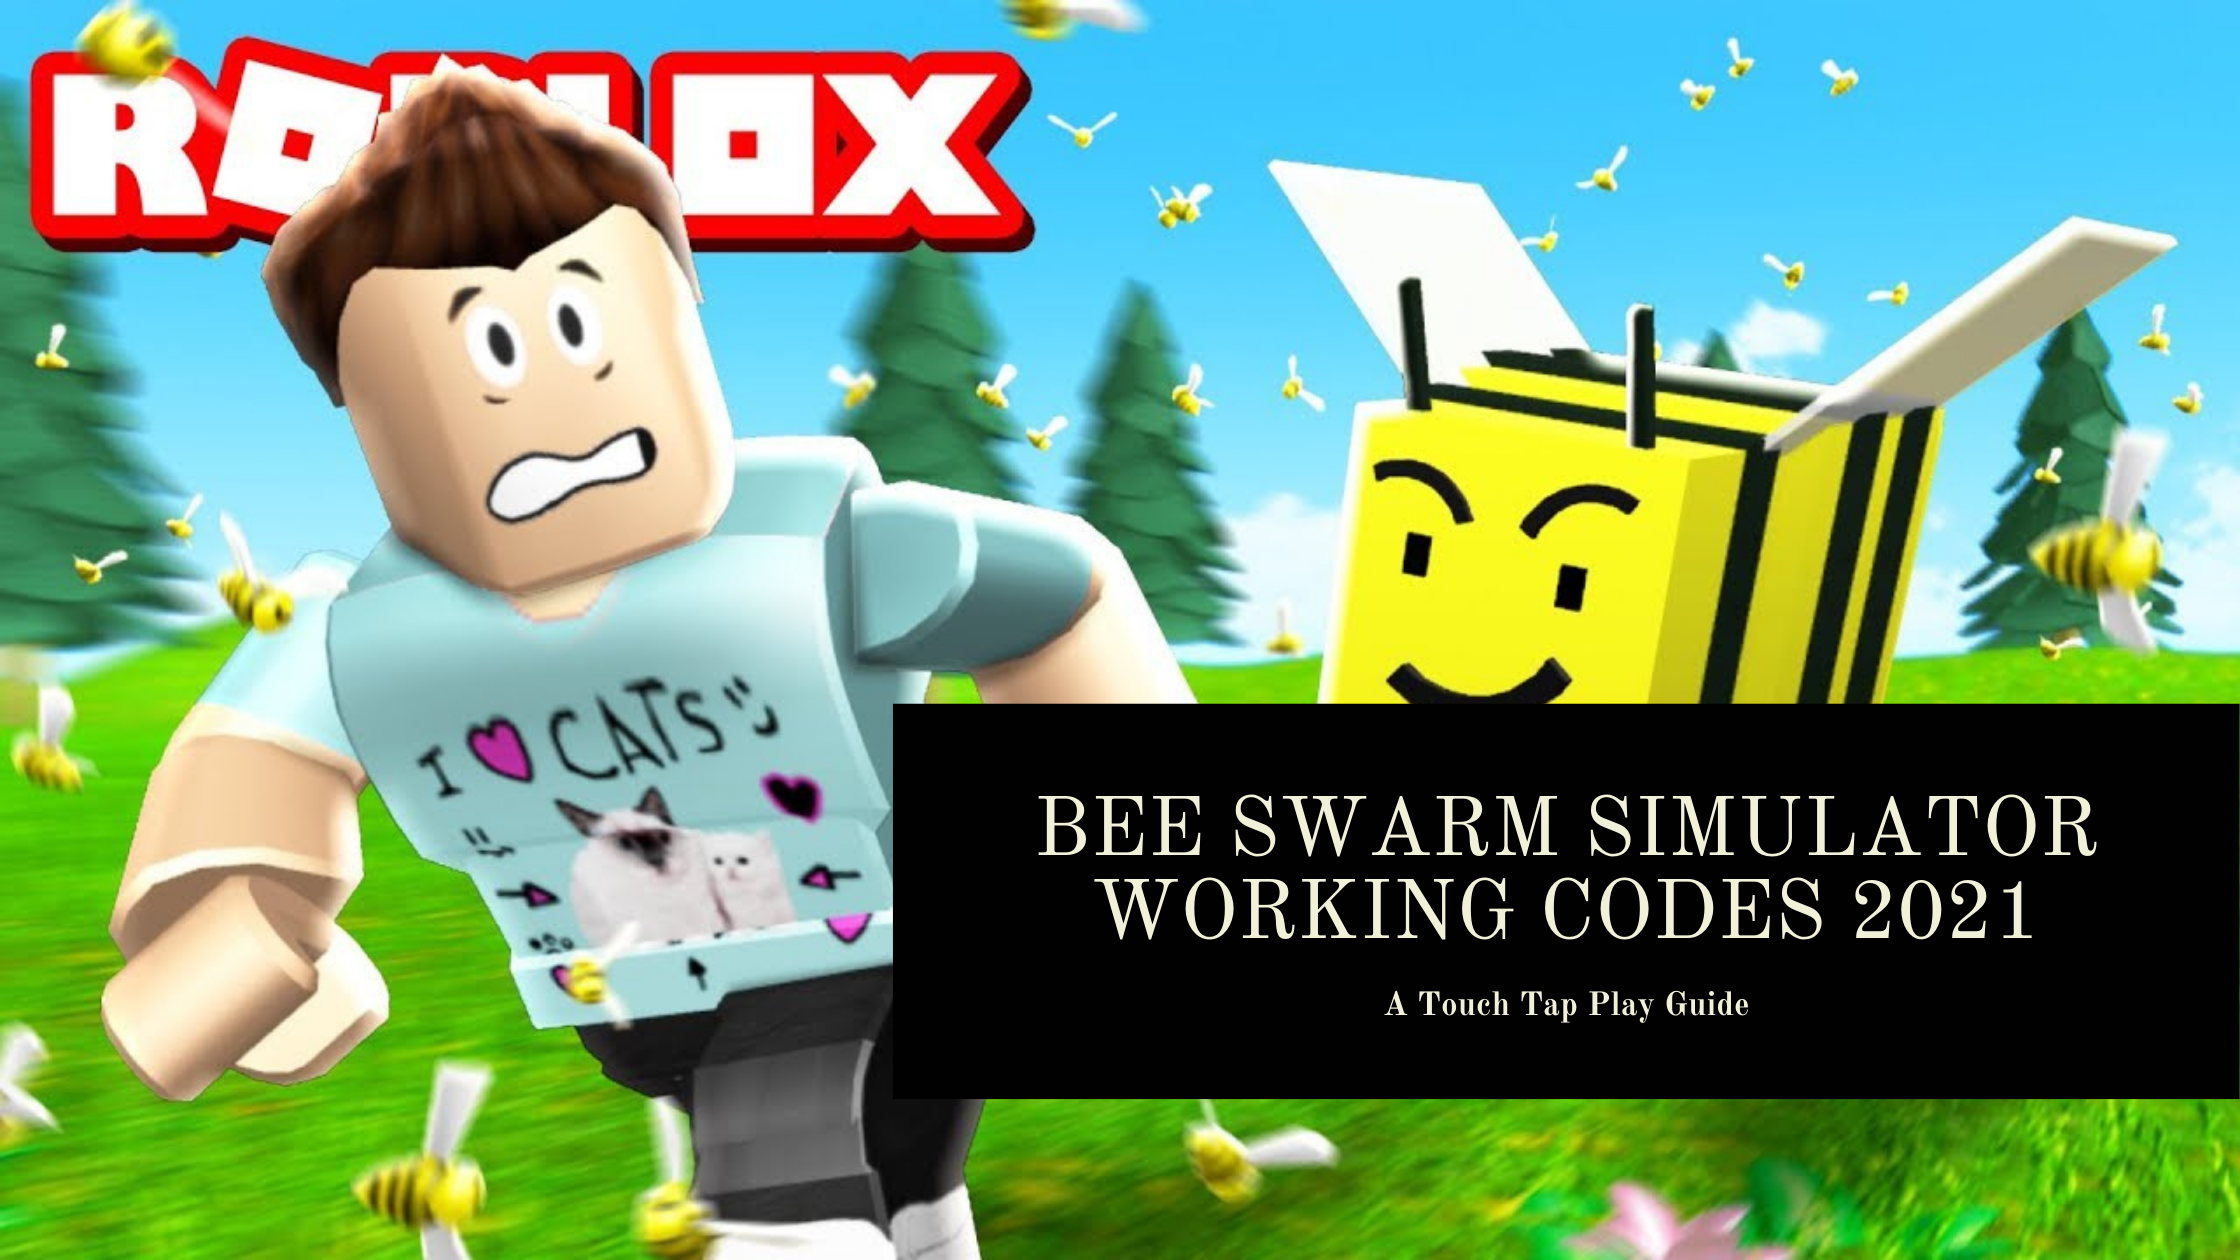 Codes 2021 swarm simulator bee Codes